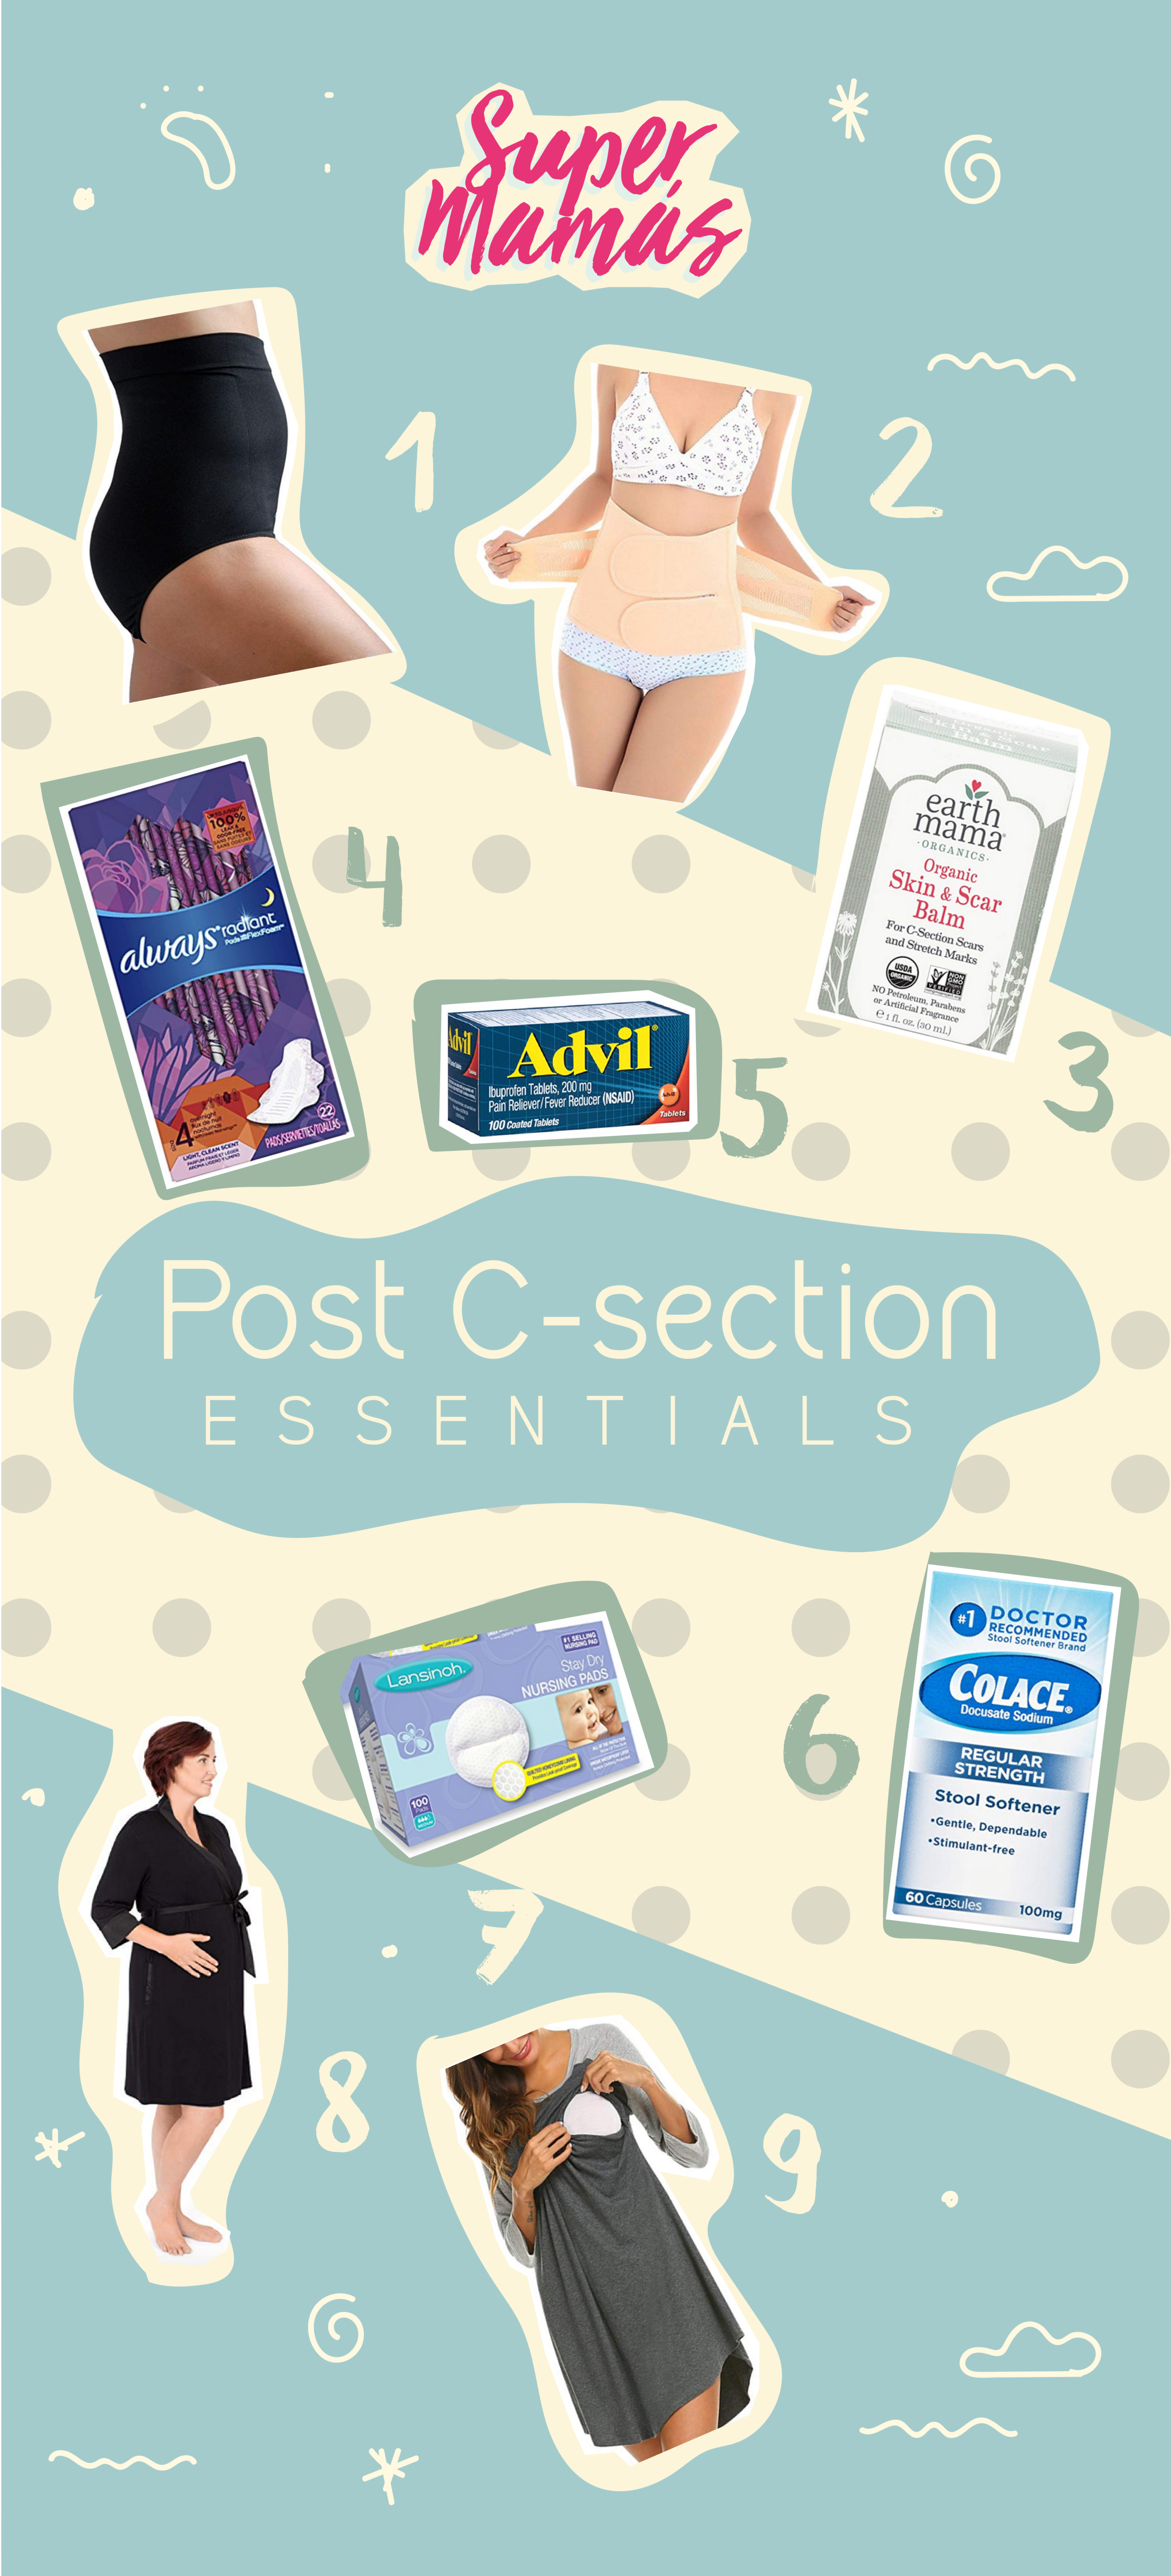 Post C-Section Essentials — Super Mamas